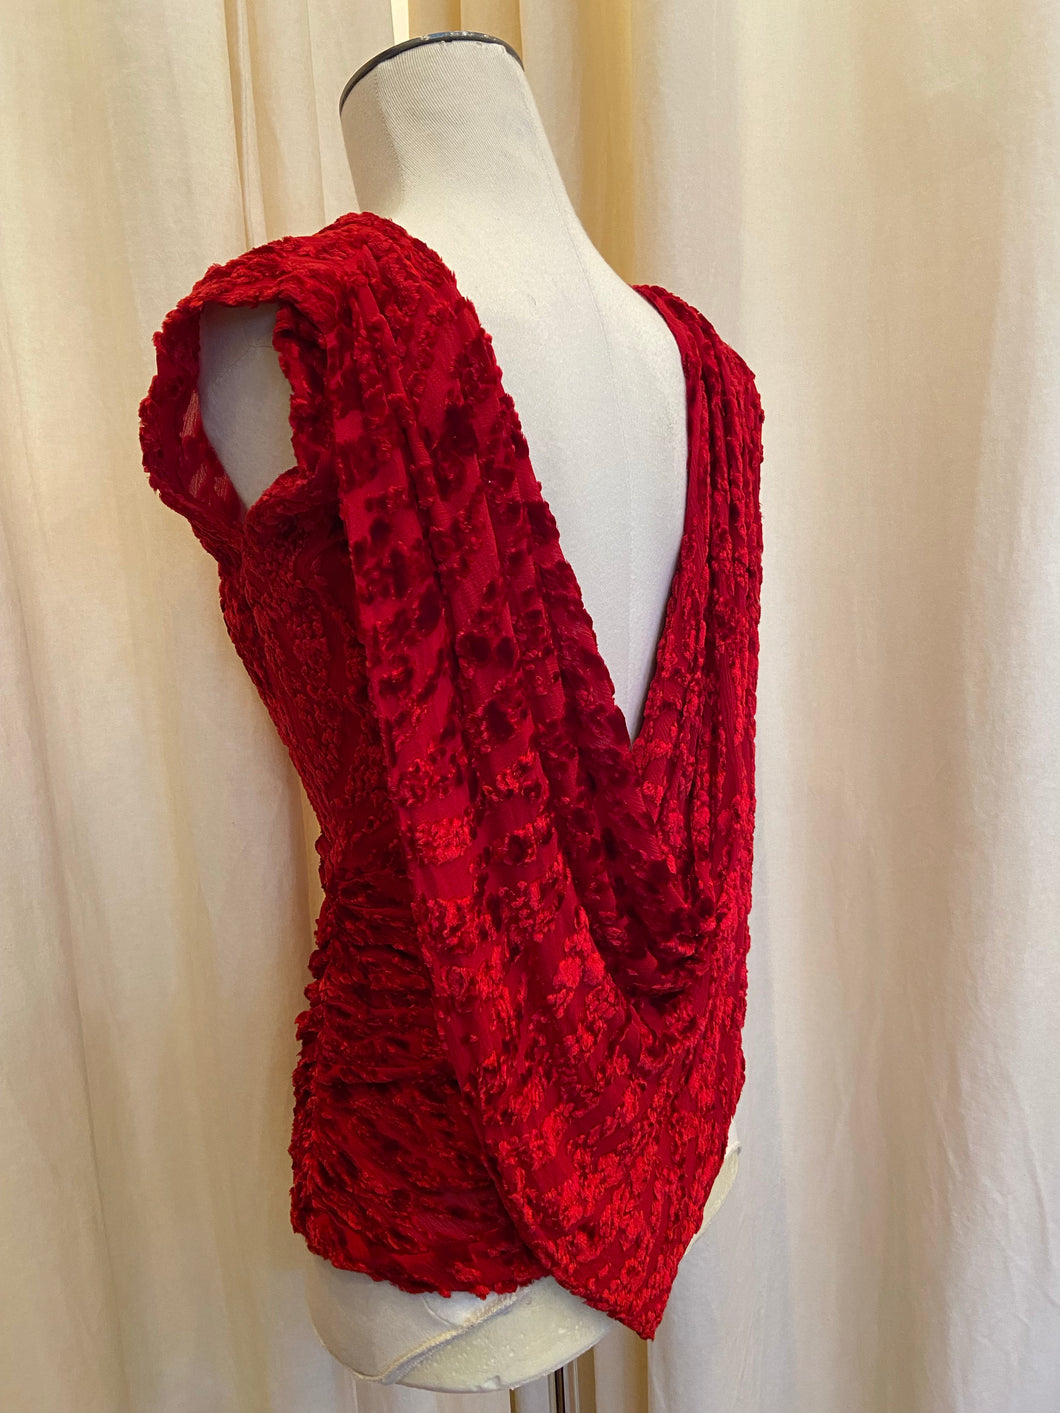 Vintage Vicky Tiel red velvet burnout top with attached cape